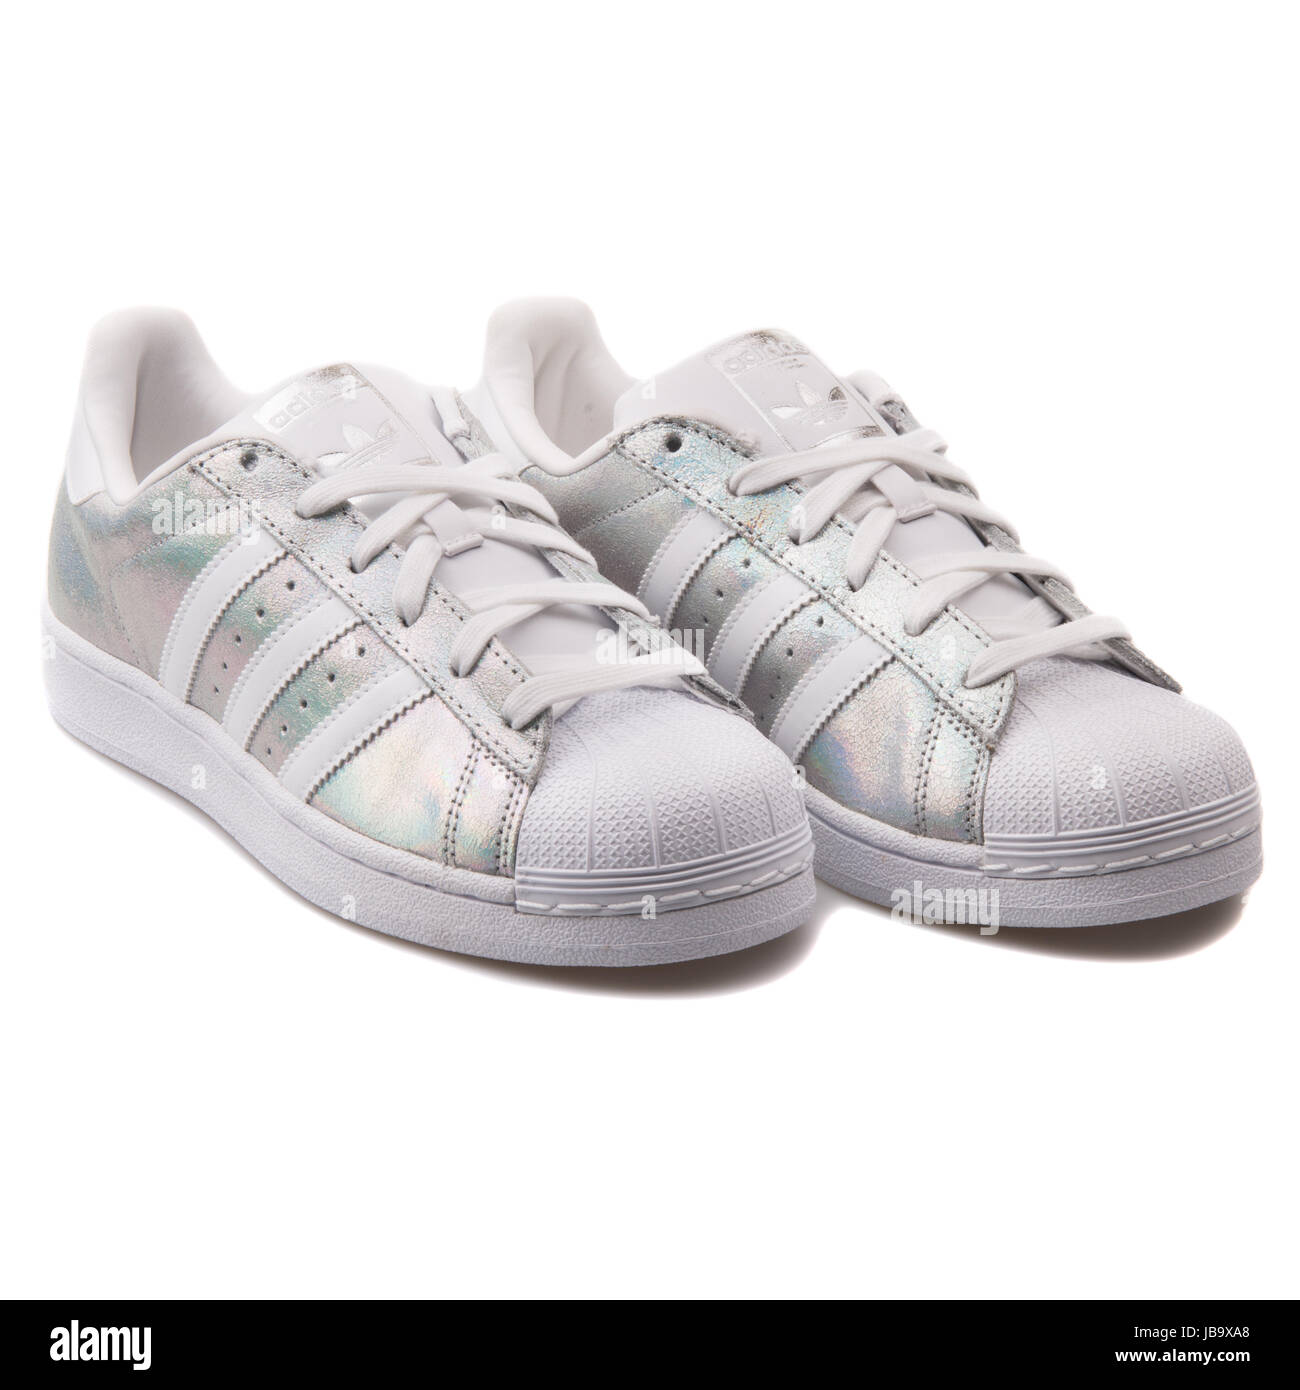 Adidas Superstar W Hologram Iridescent Women's Shoes - S81644 Photo - Alamy